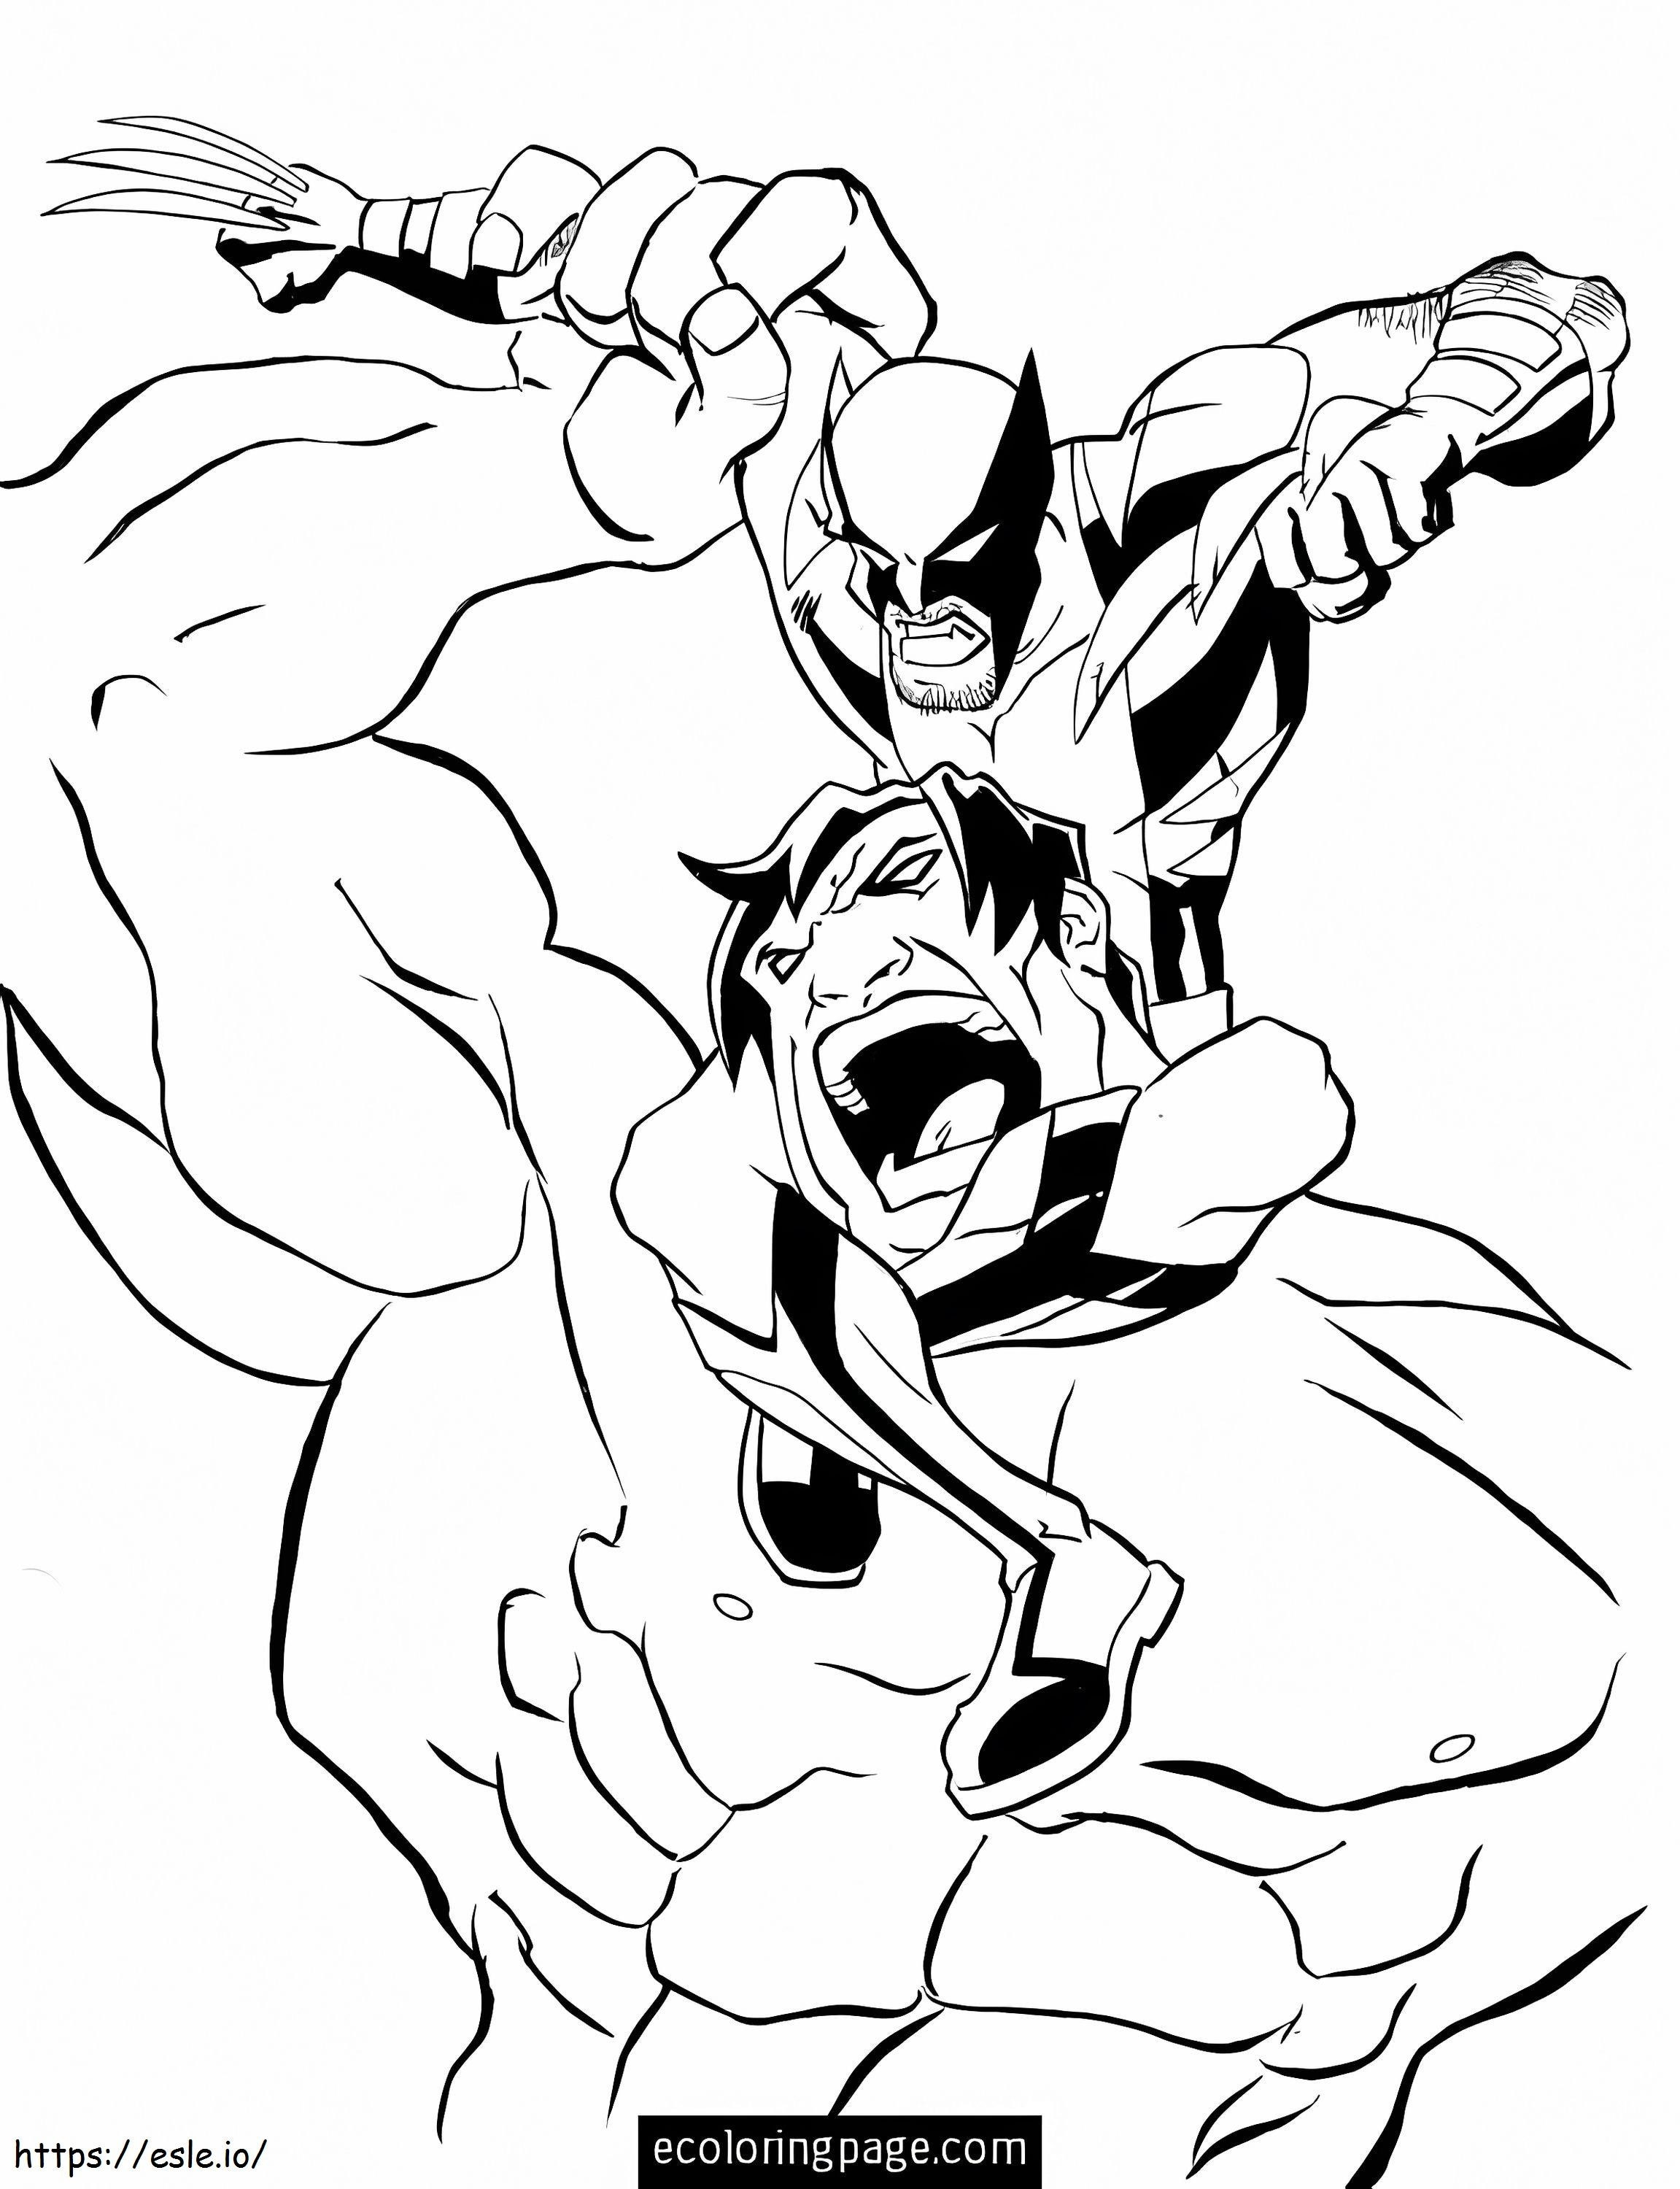 Hulk Wolverine'e Karşı boyama